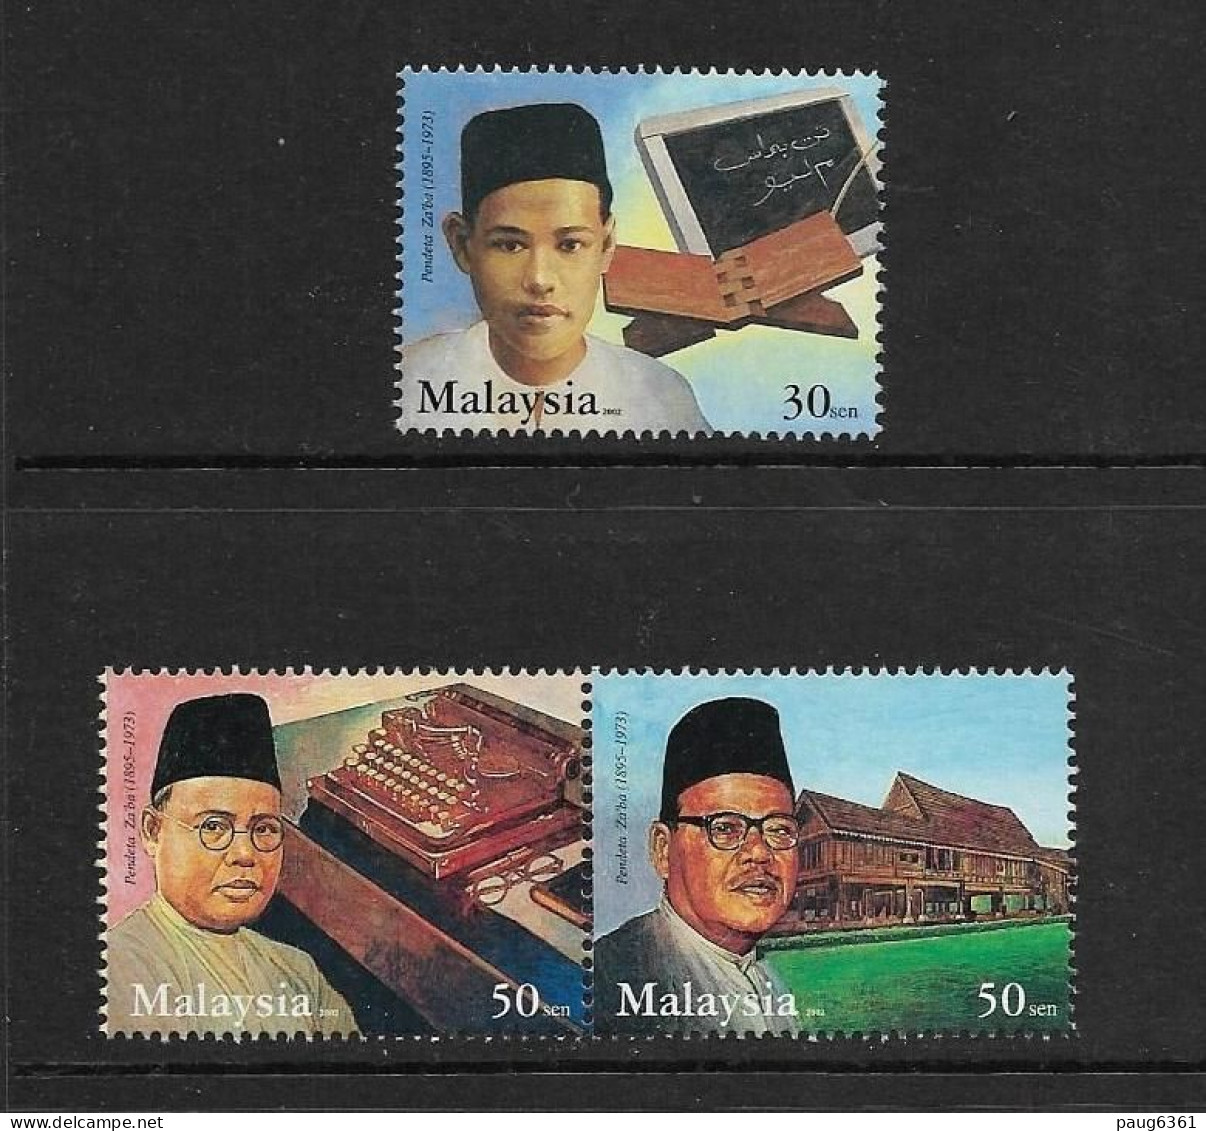 MALAYSIA 2002 MORT DE PENDETA ZA'BA  YVERT N°951/53 NEUF MNH** - Malaysia (1964-...)